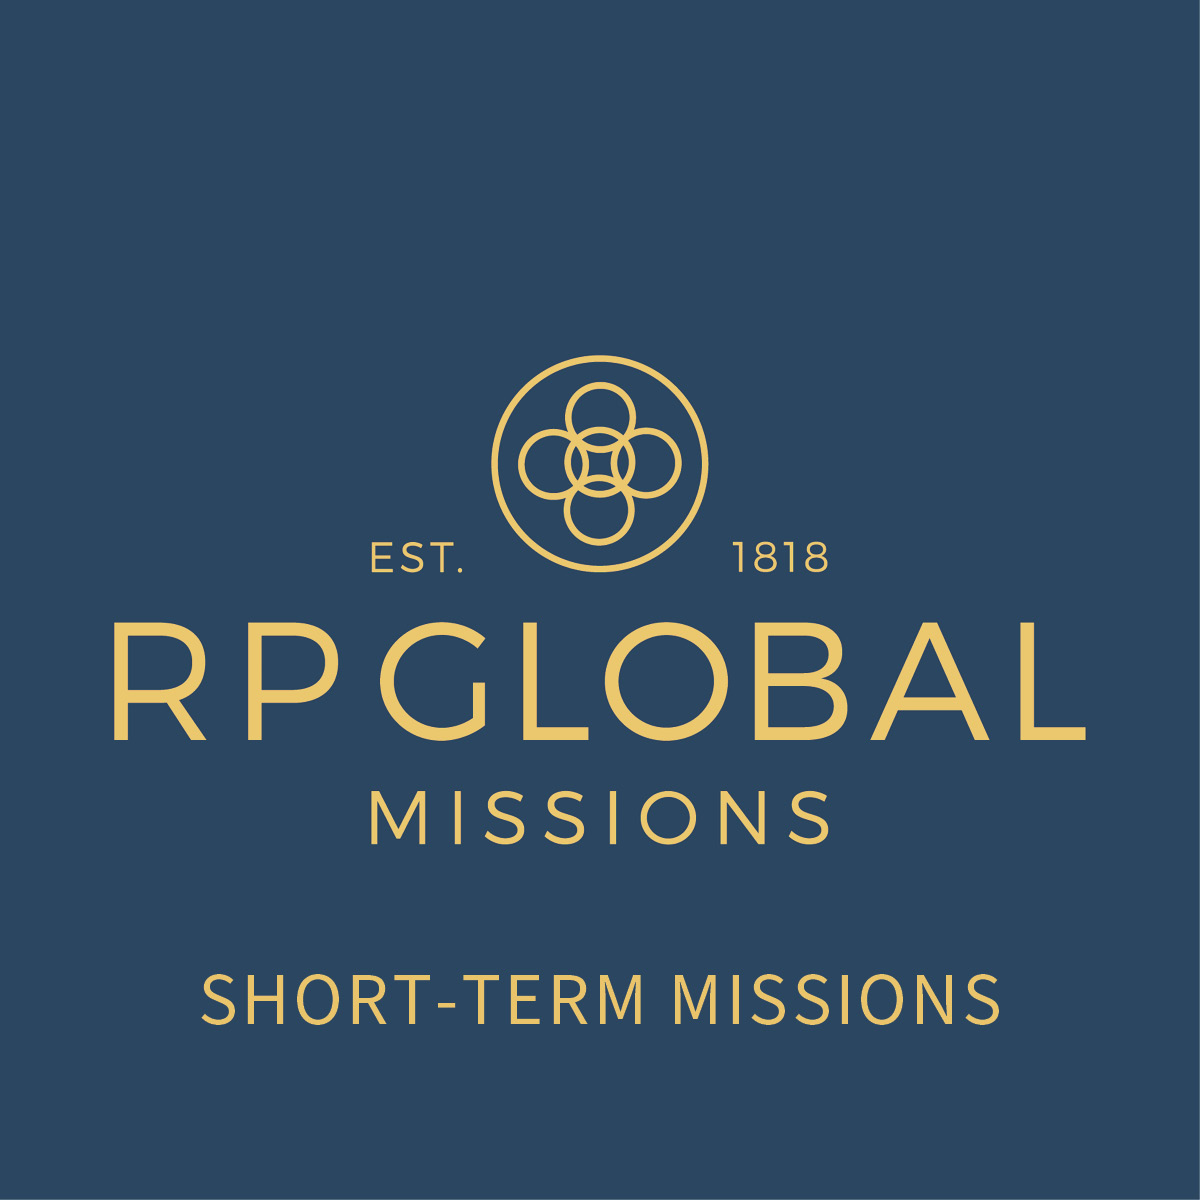 Short-Term Missions